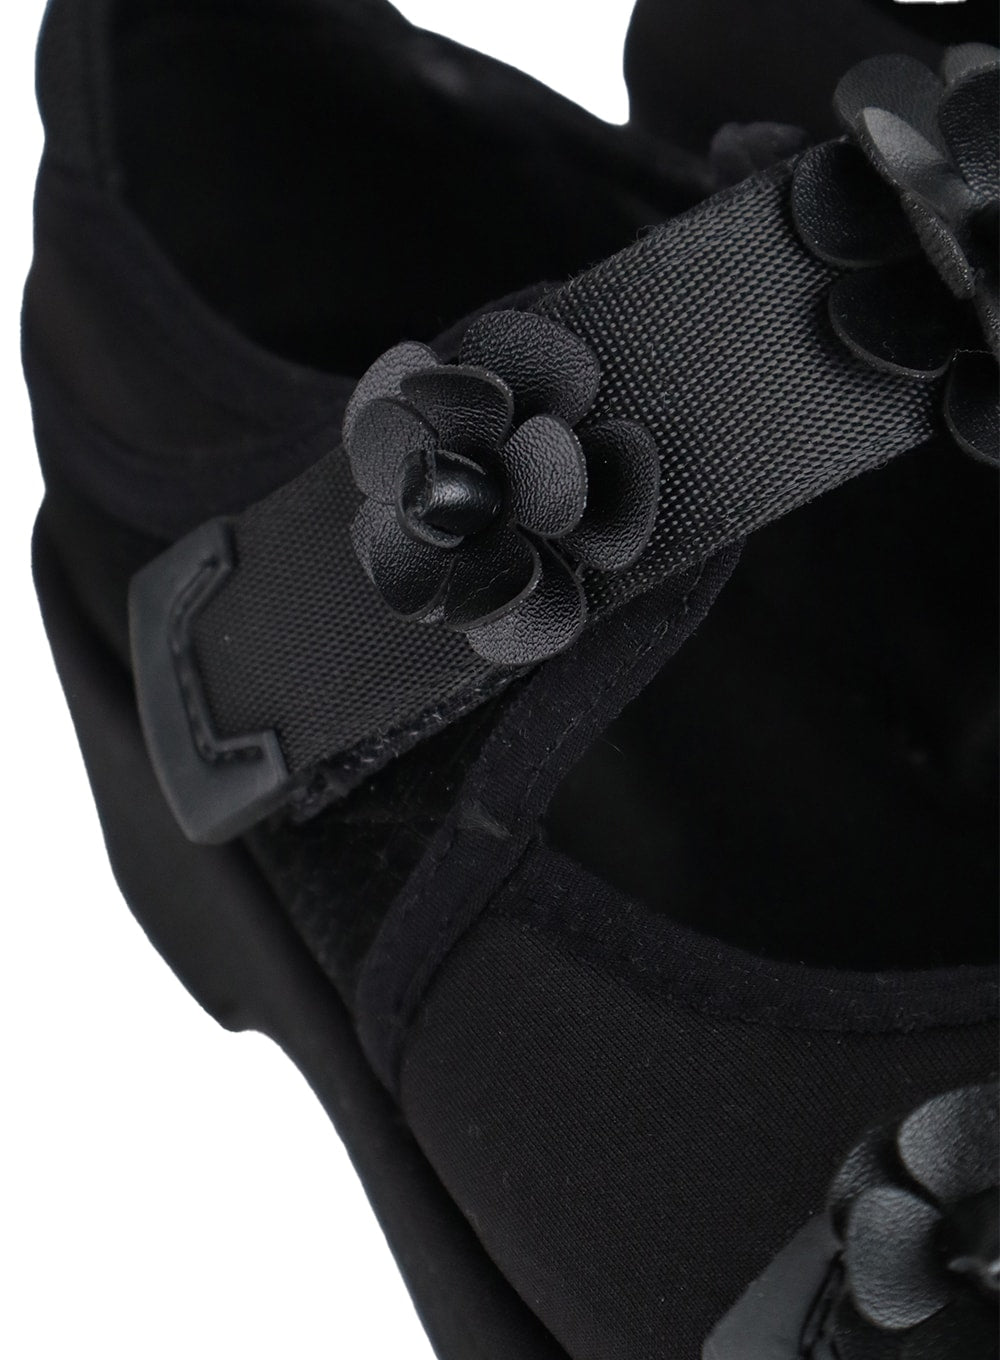 chunky-heeled-flower-strap-mary-jane-shoes-om412